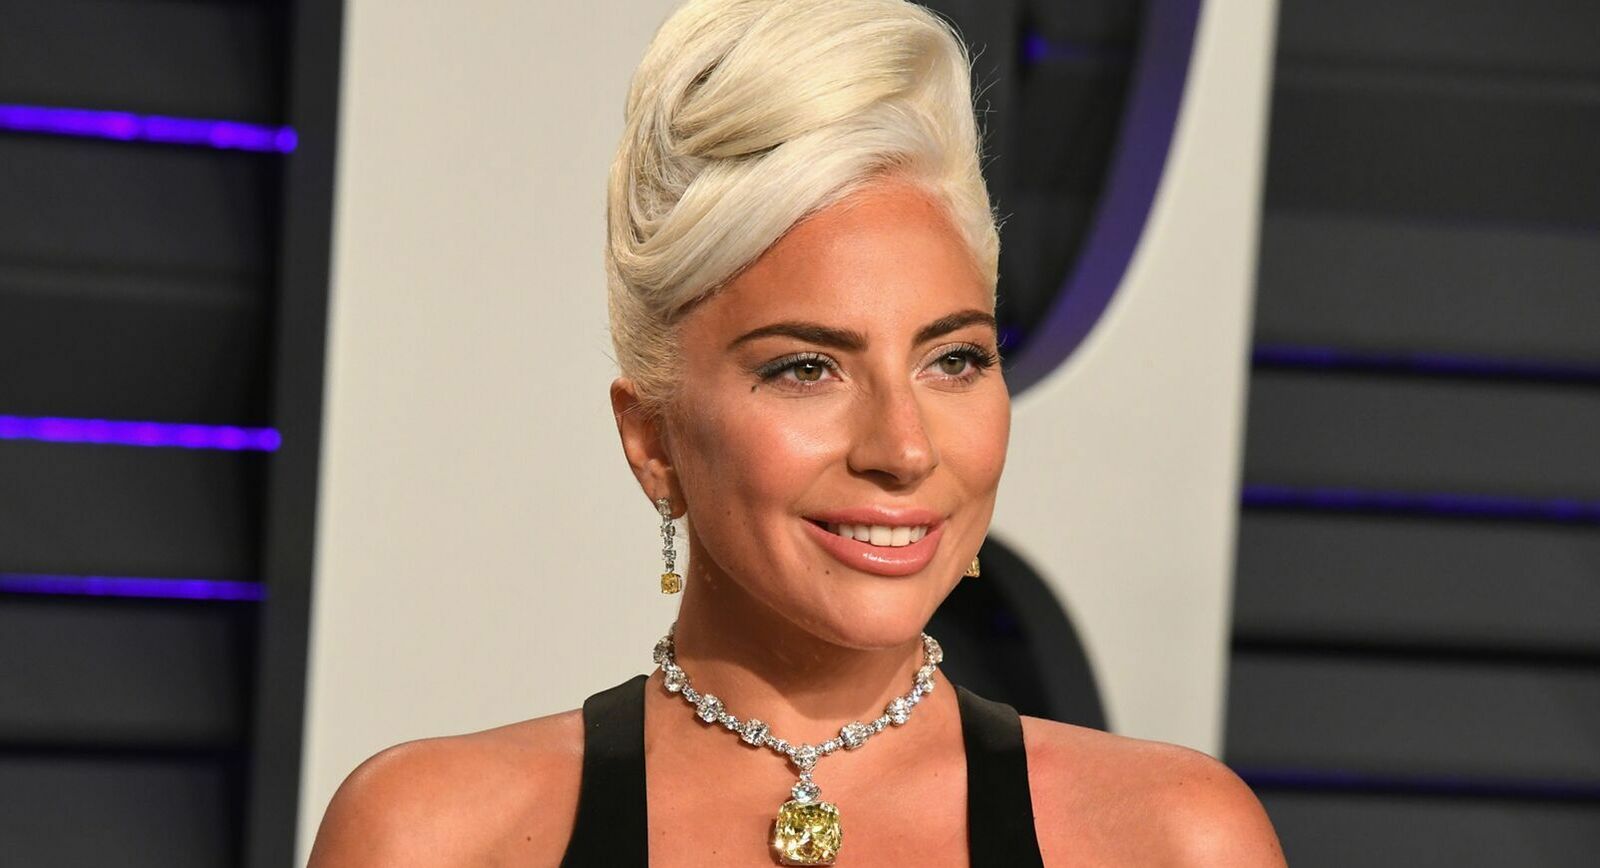 Леди Гага на церемонии вручения премии "Оскар" 2019 года с желтым бриллиантом Тиффани весом 128,54 карата